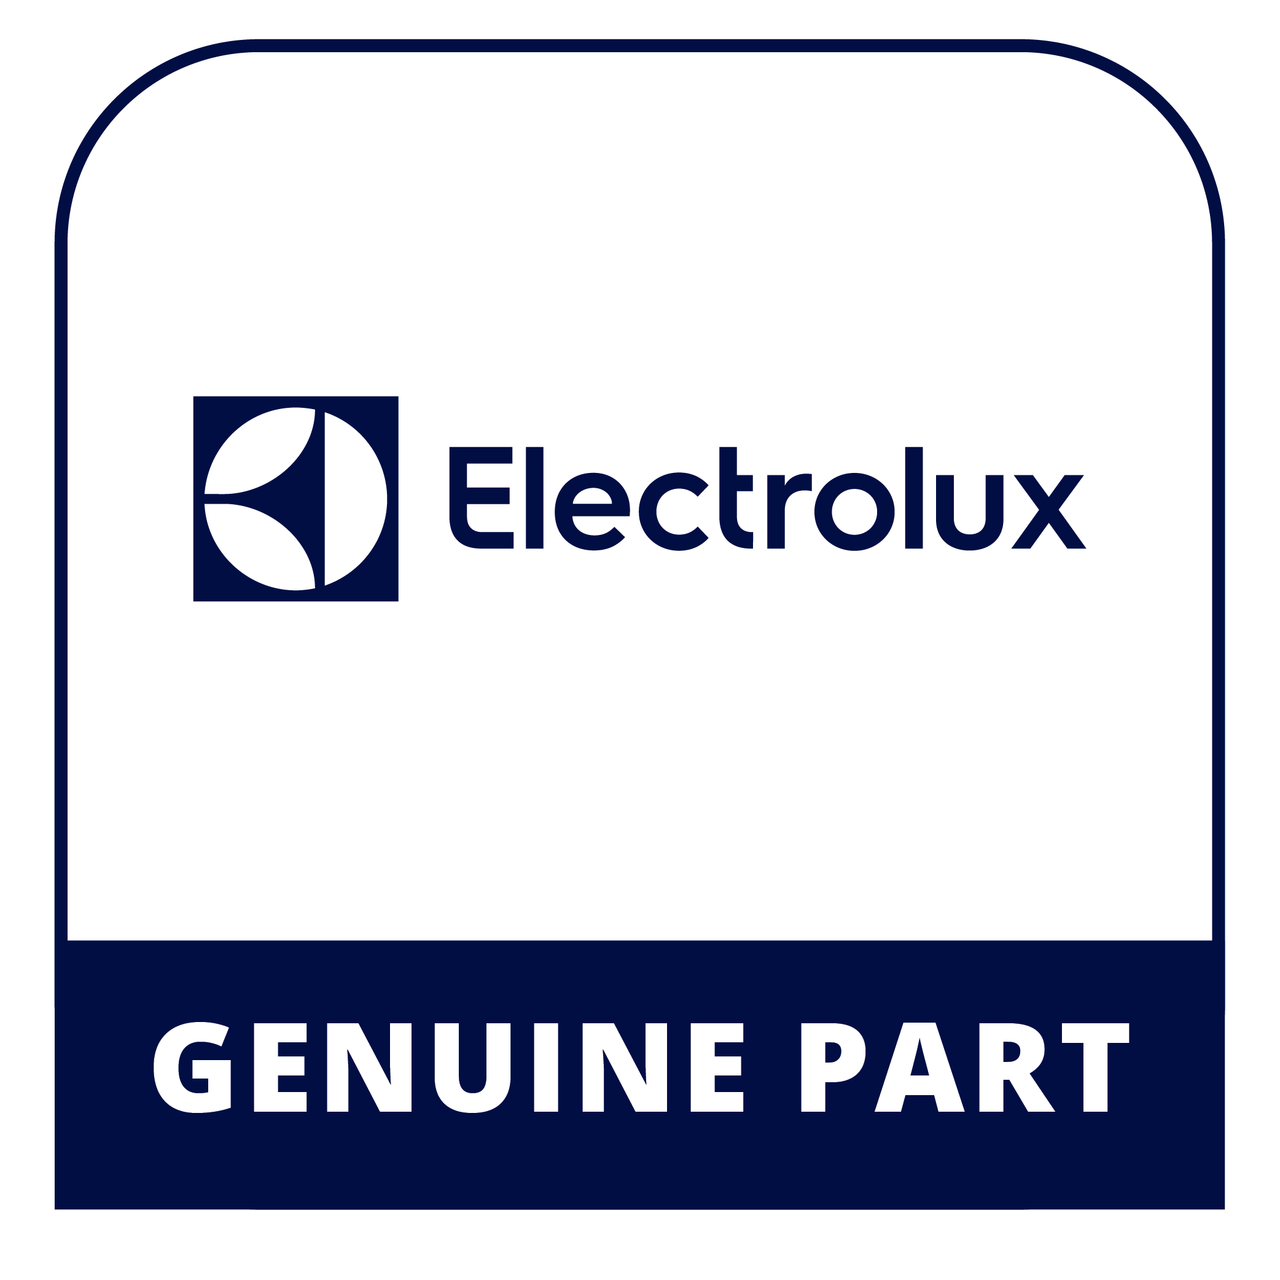 Frigidaire - Electrolux 5304496236 - Door Reversal Kit - Genuine Electrolux Part